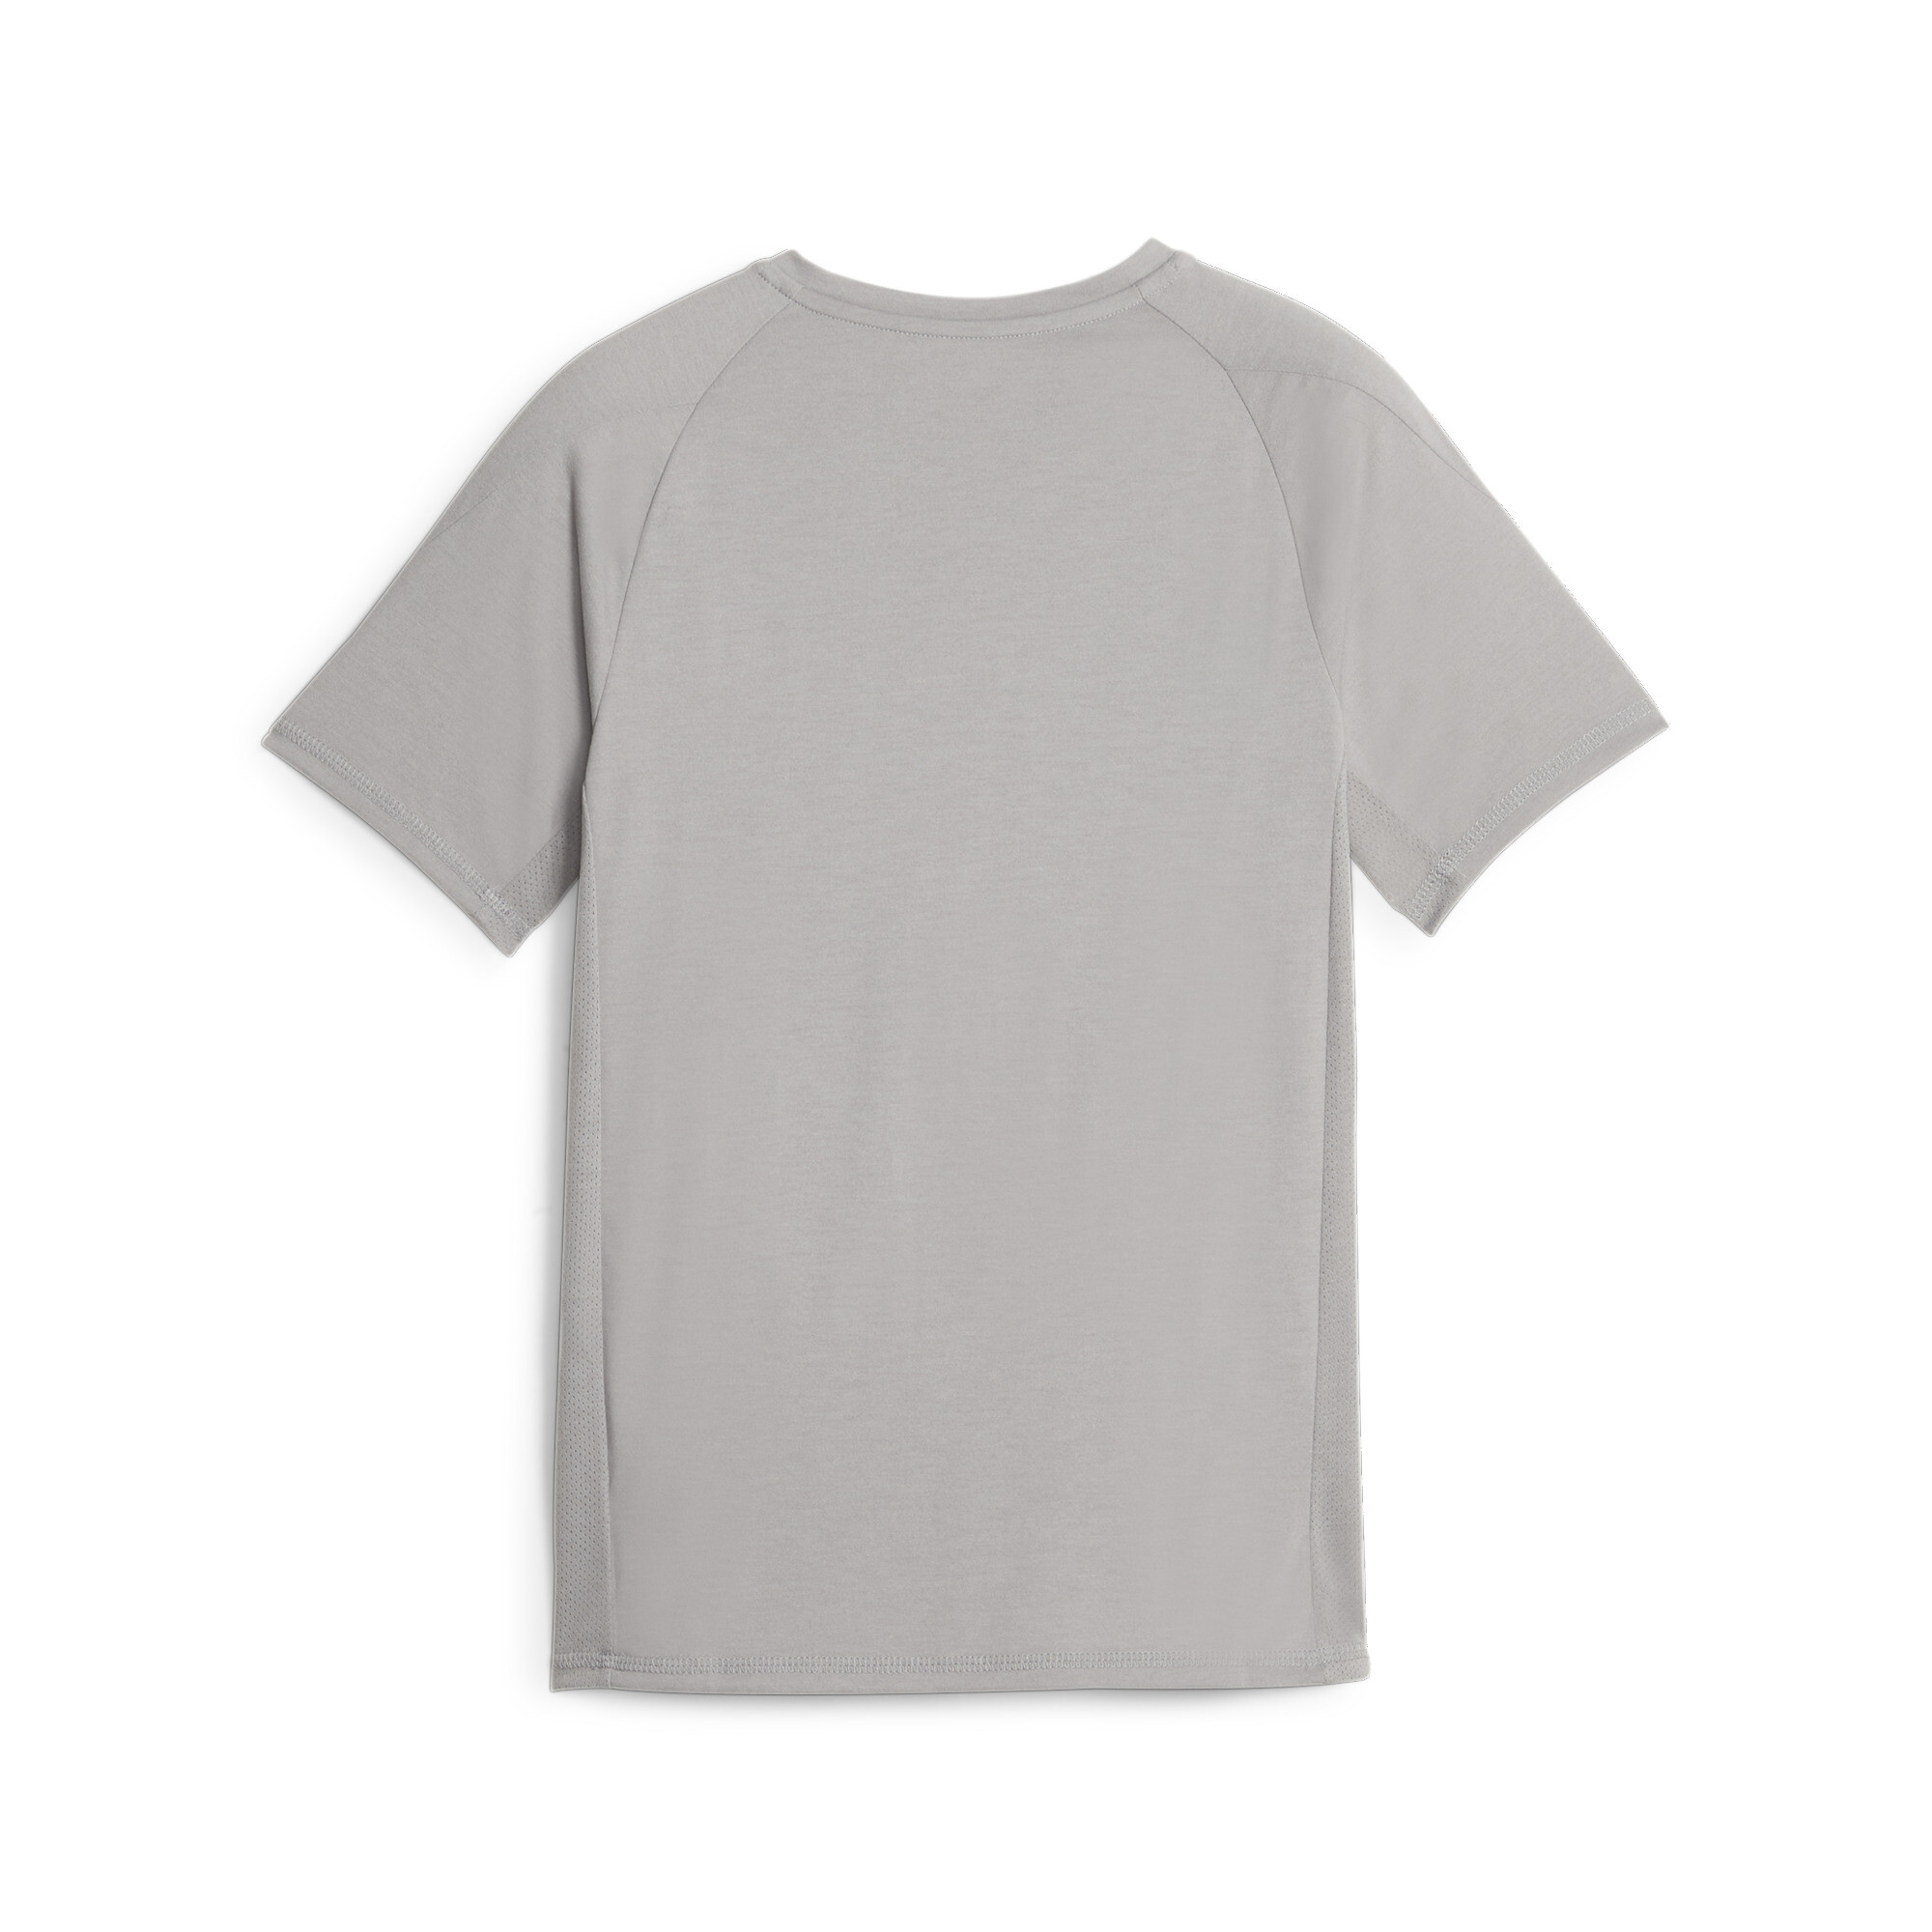 PUMA Evostripe T-Shirt In Gray, Size 15-16 Youth